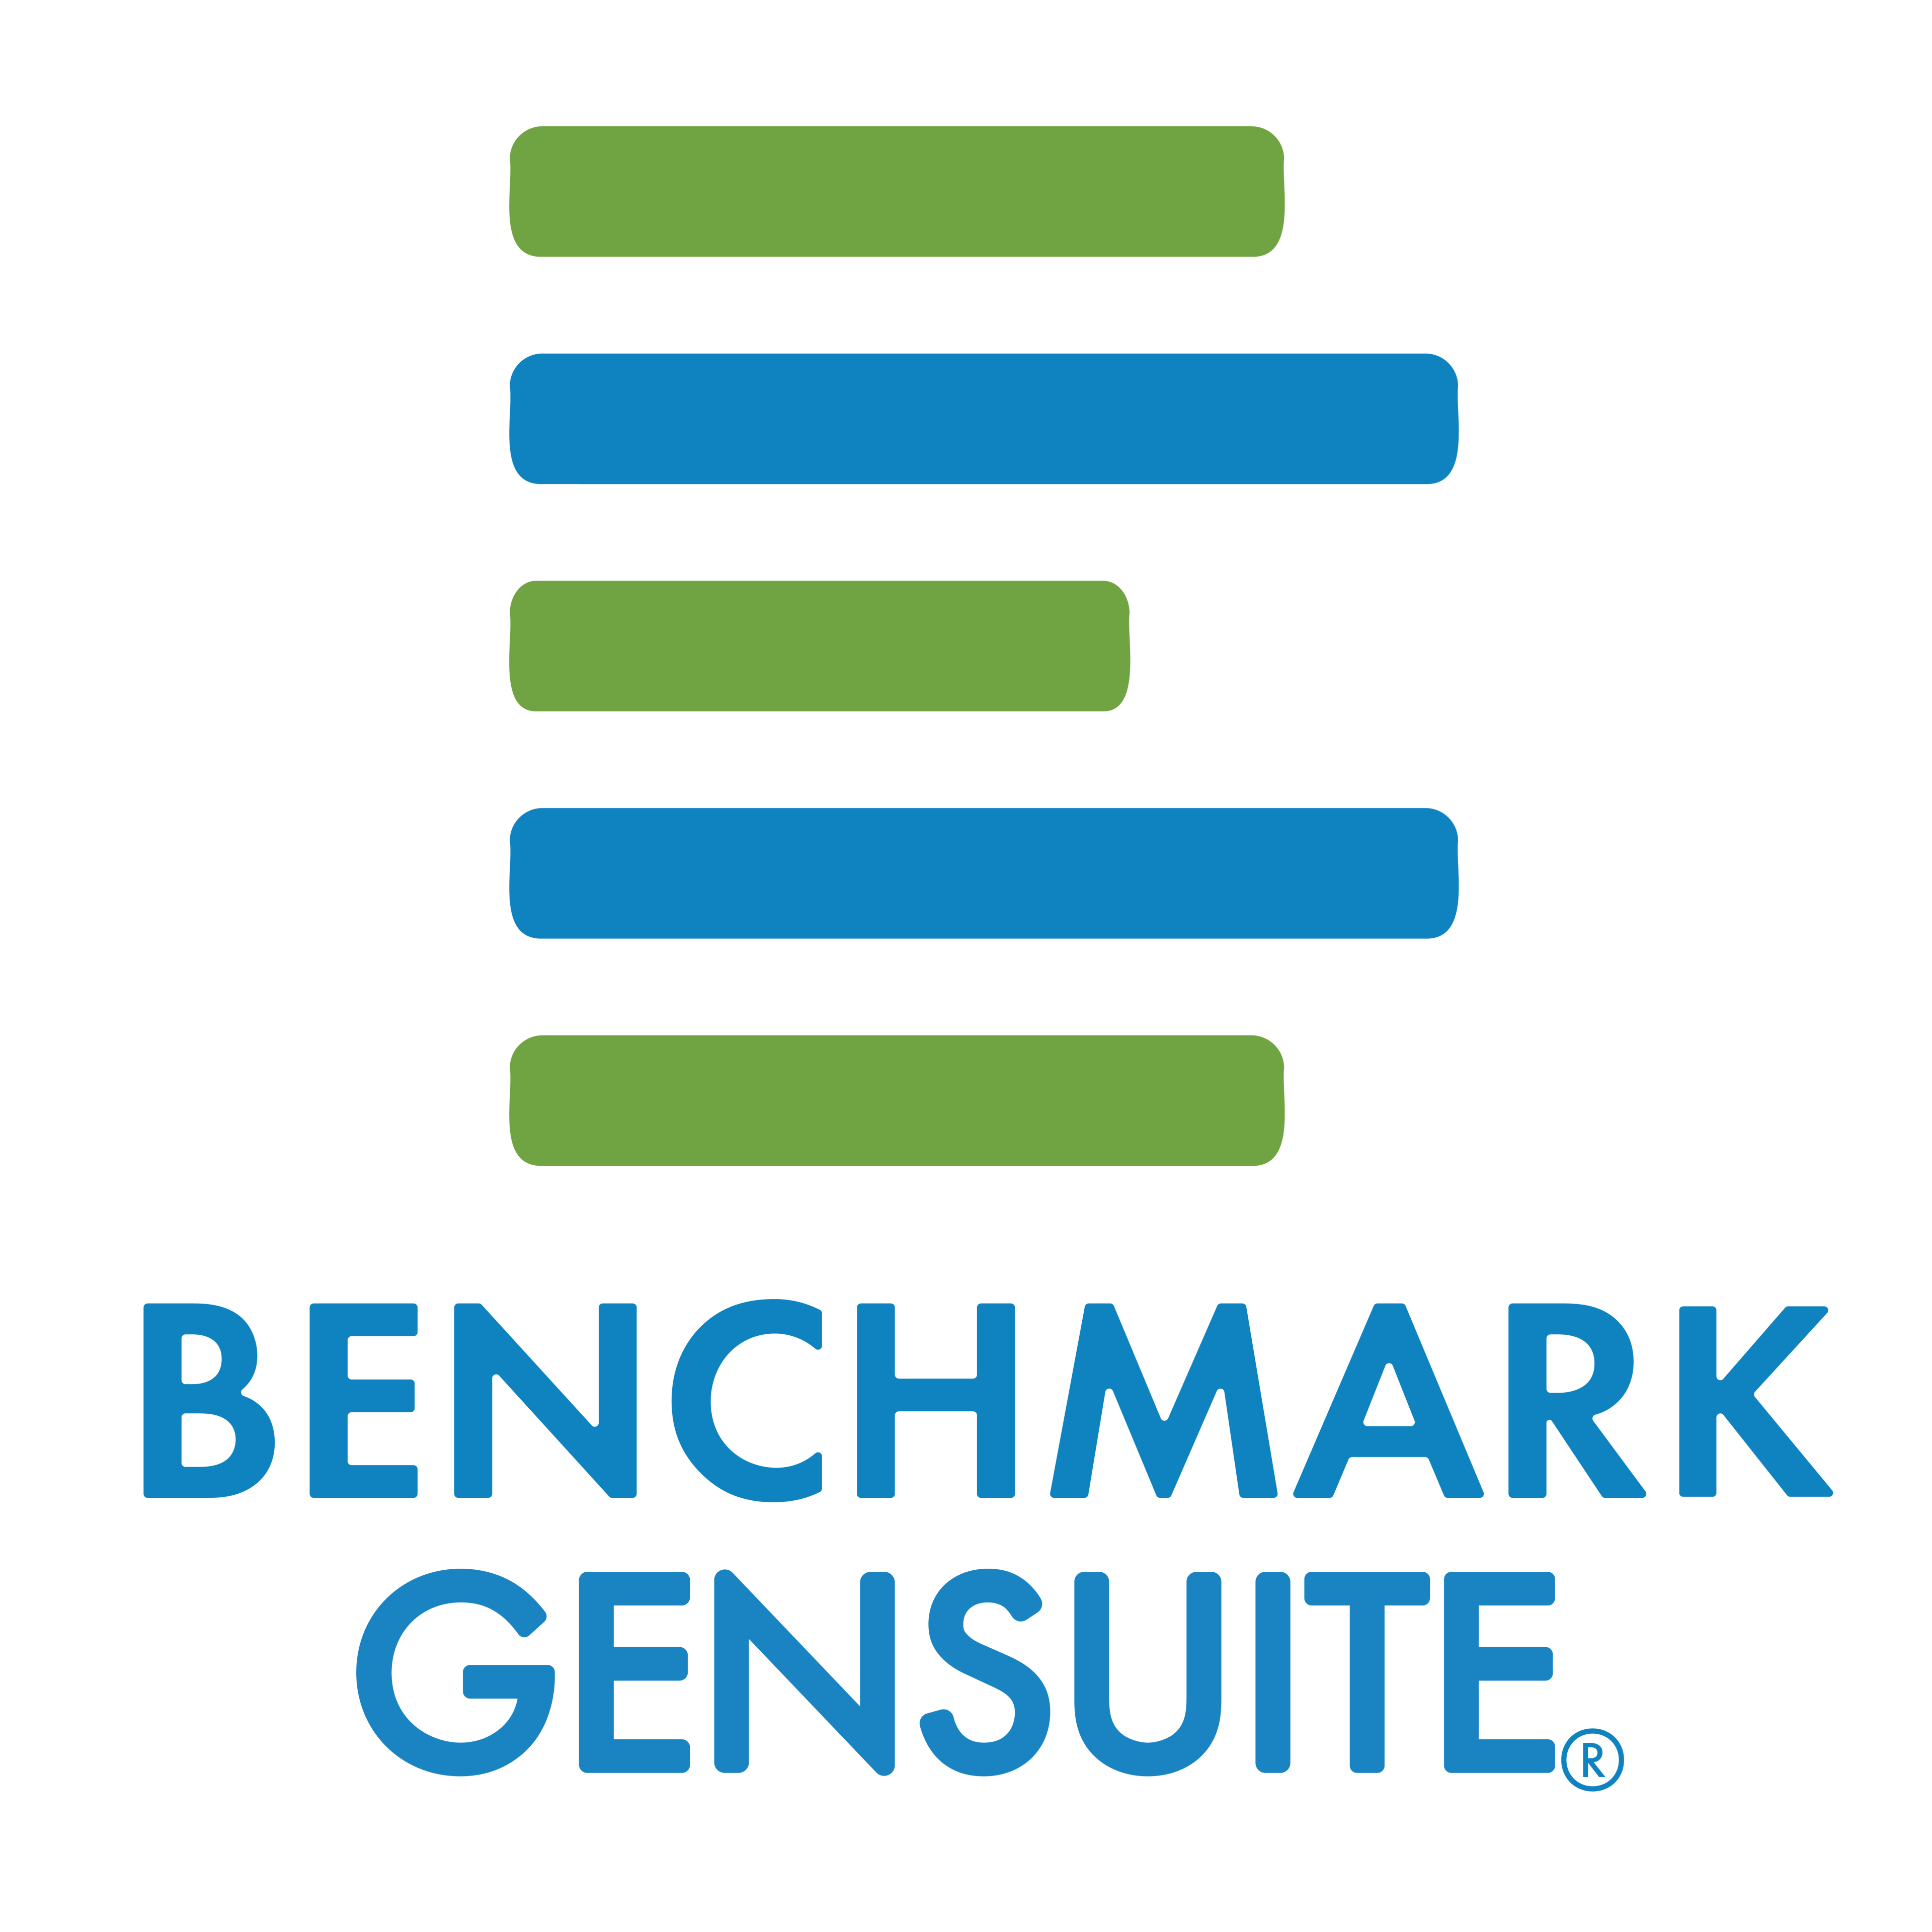 Benchmark Gensuite EHS Logo